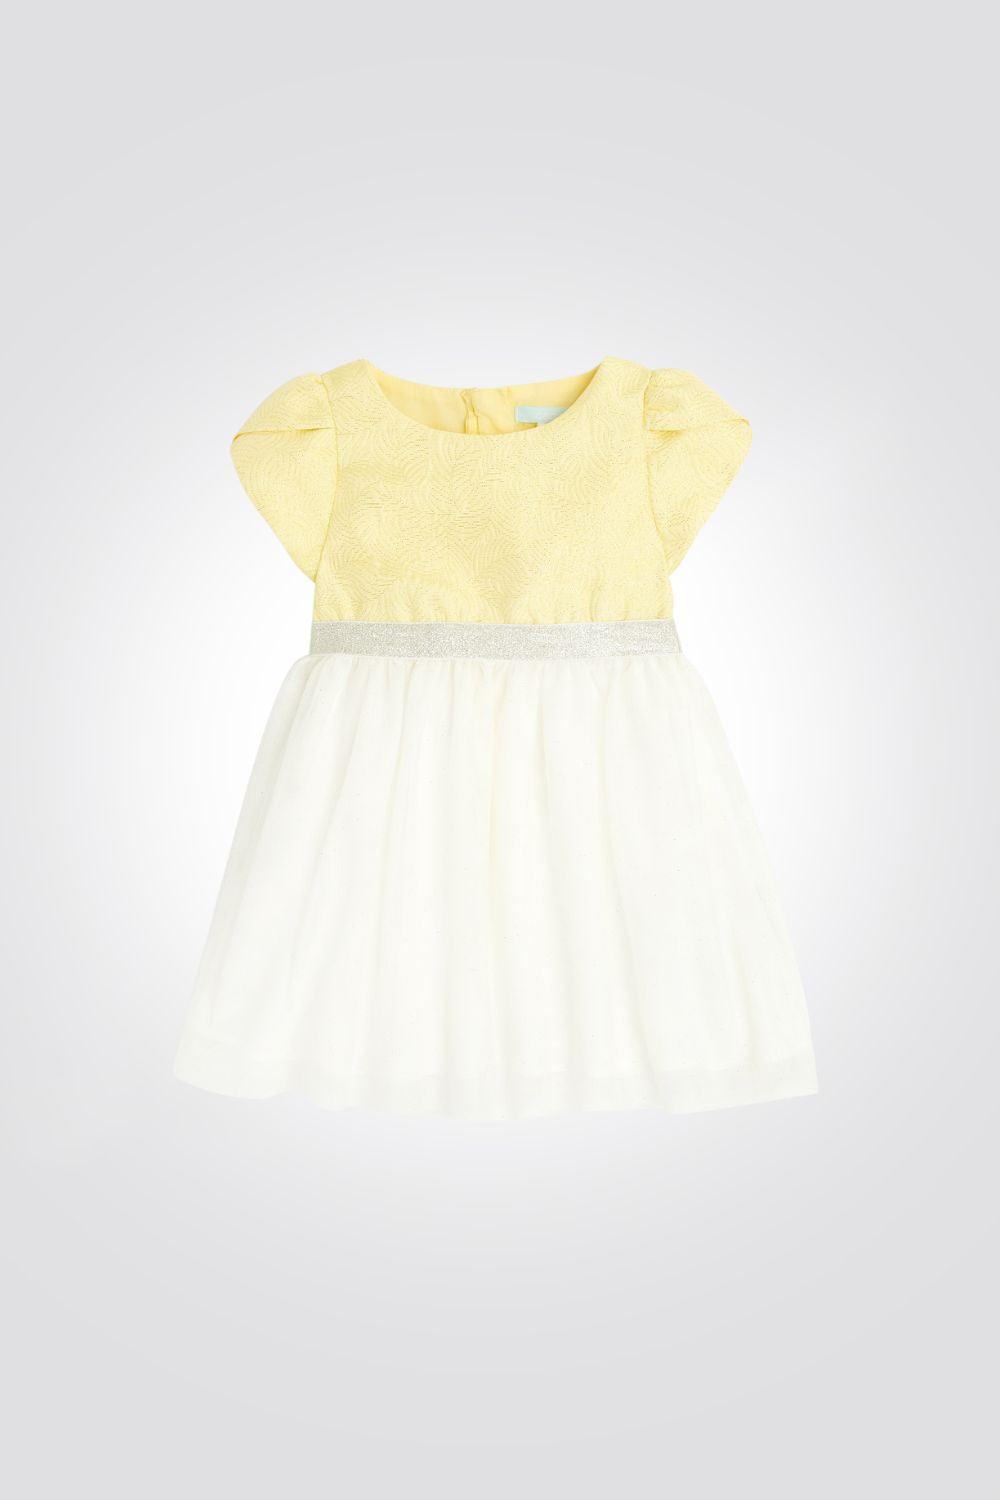 OBAIBI - שמלת טול בצבע צהוב לתינוקות - MASHBIR//365